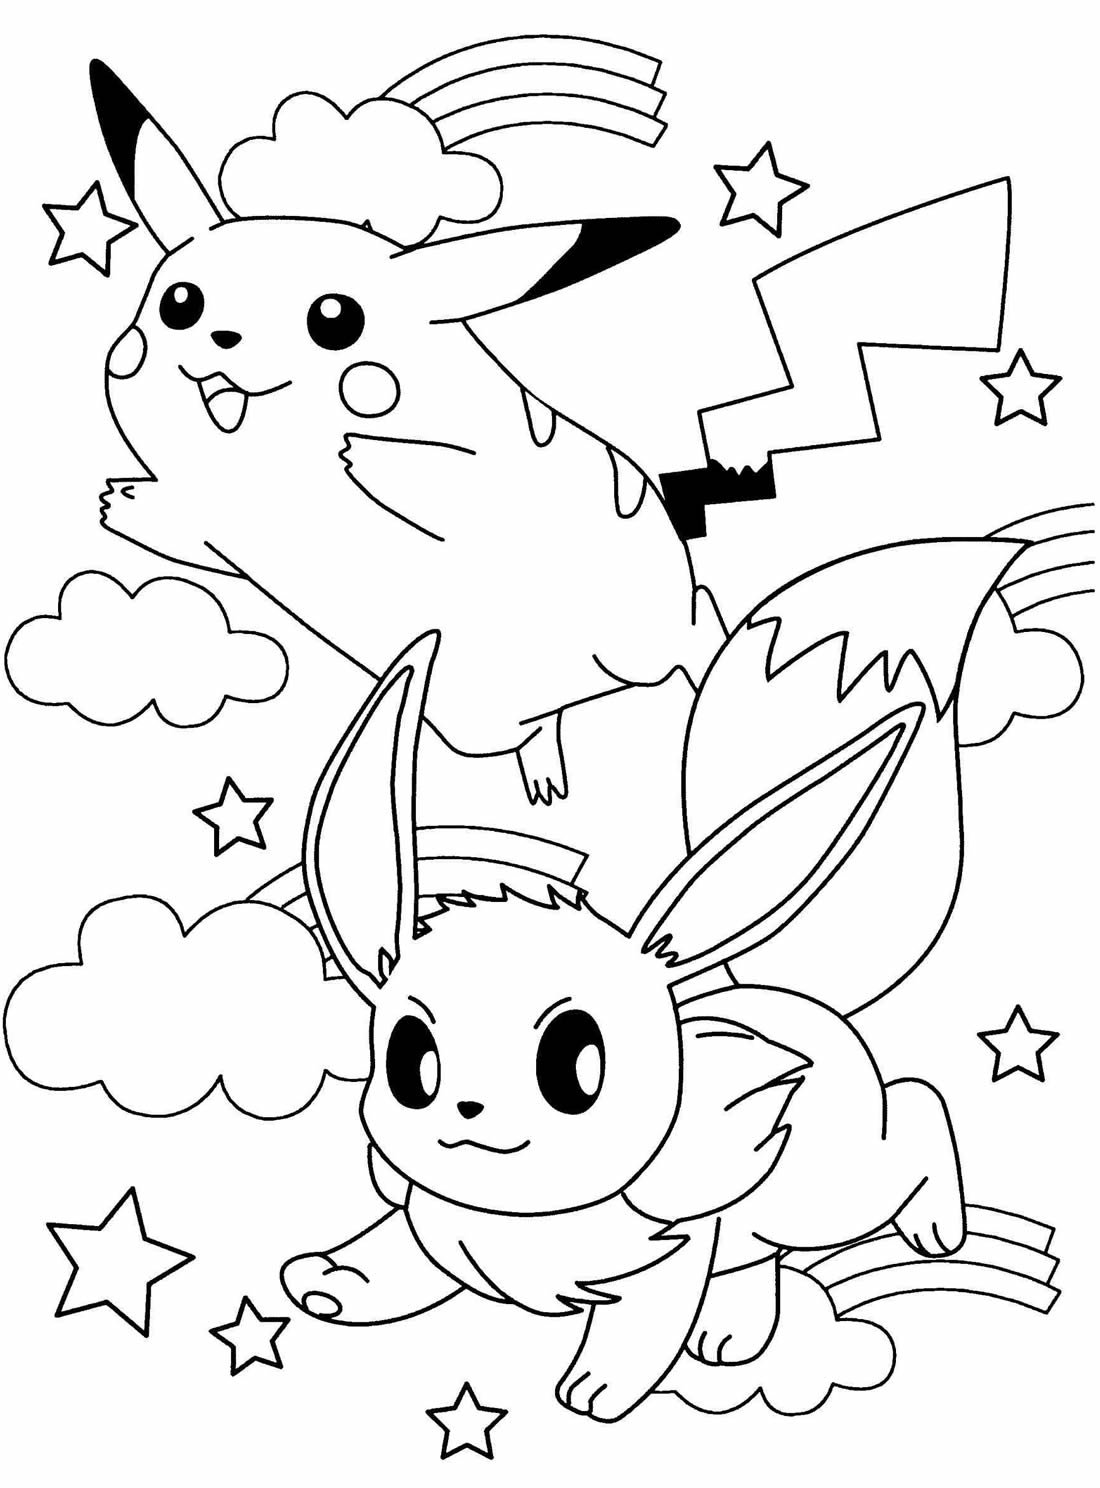 Desenho de Pokemons